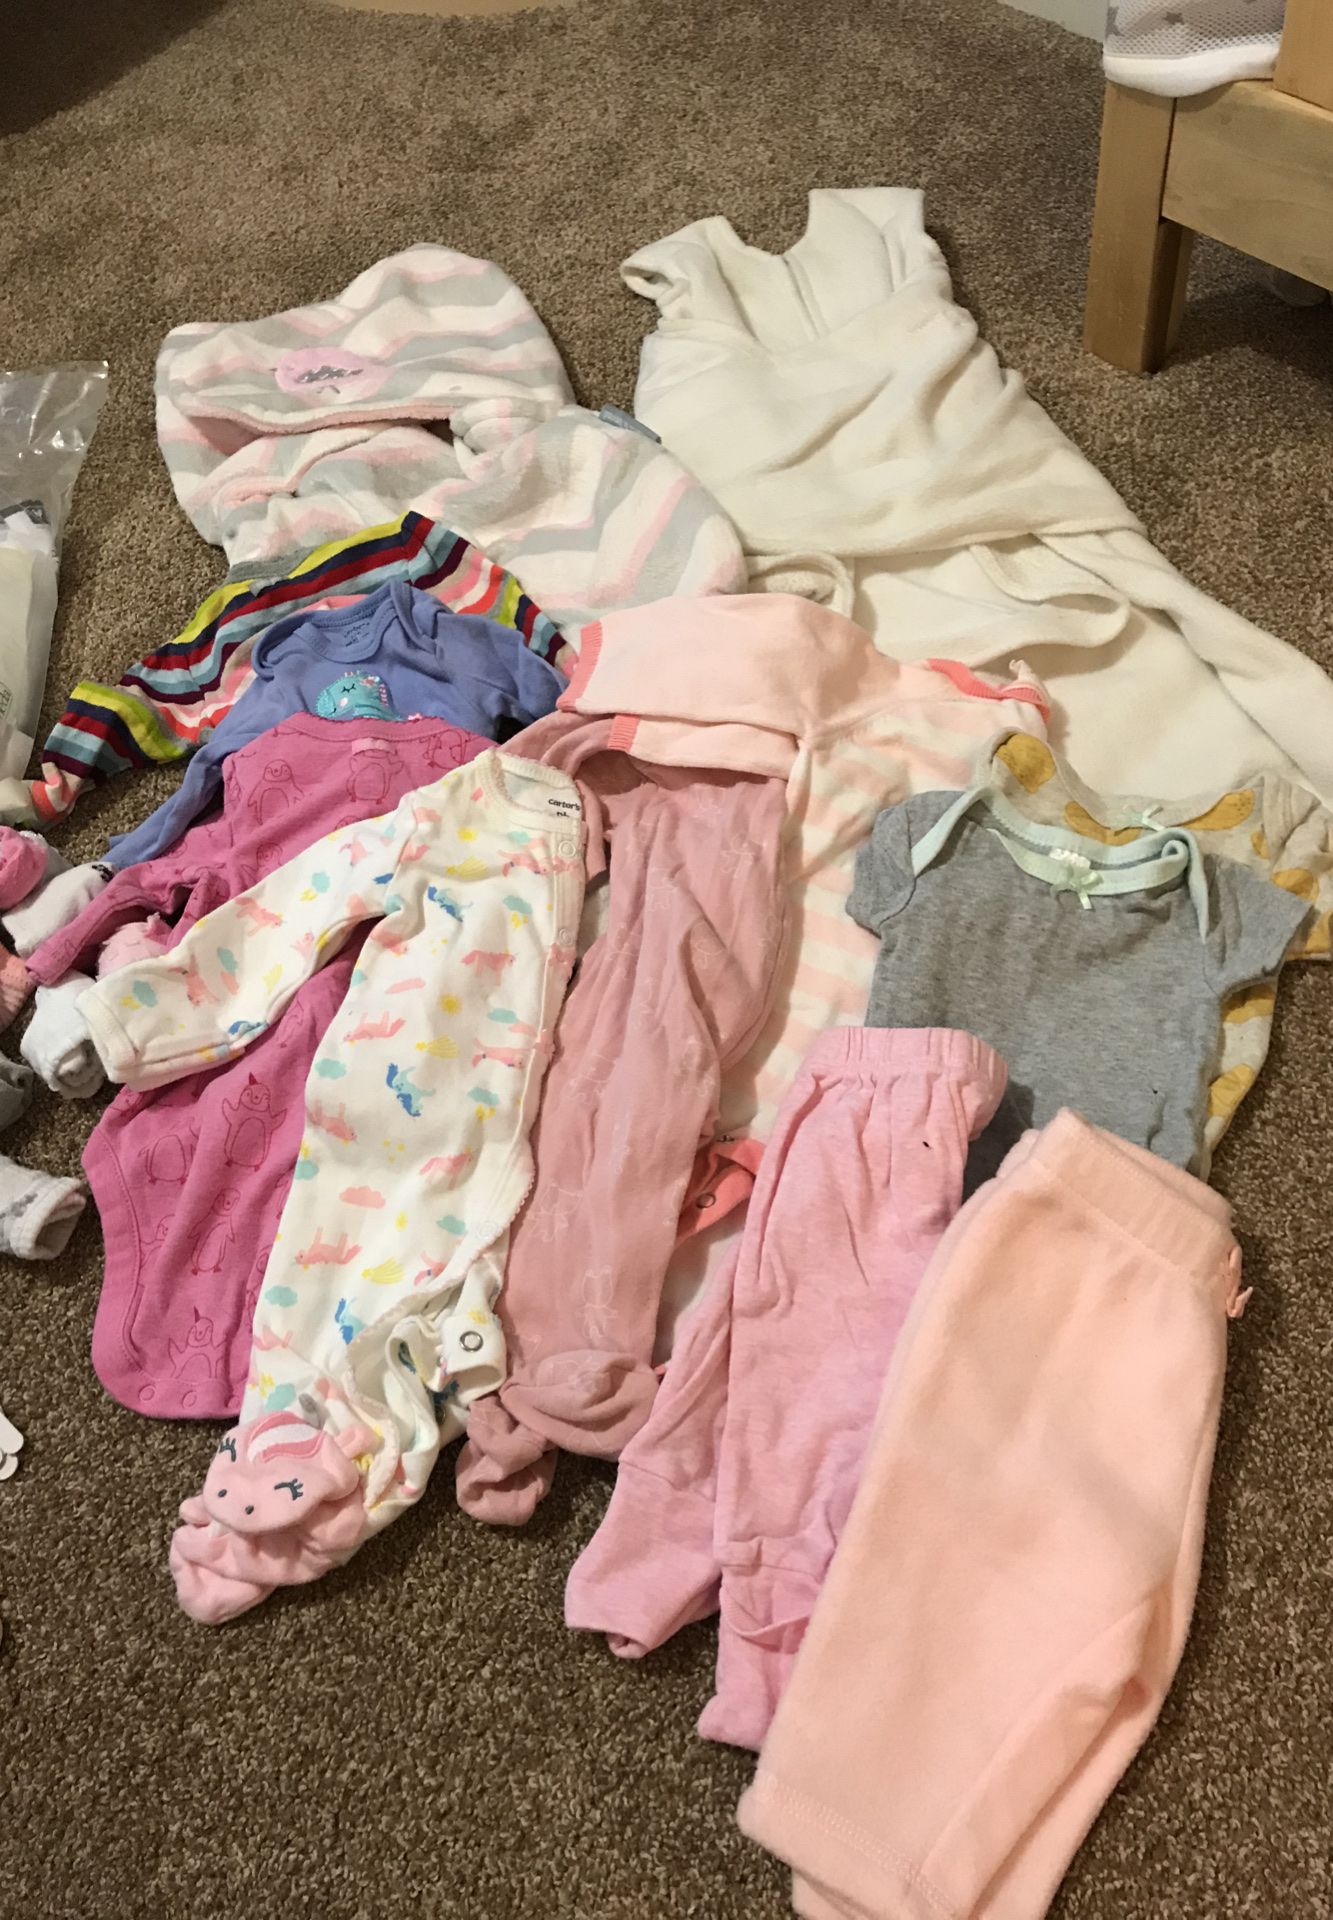 Newborn clothes, swaddles, burp cloth, hygiene goodies